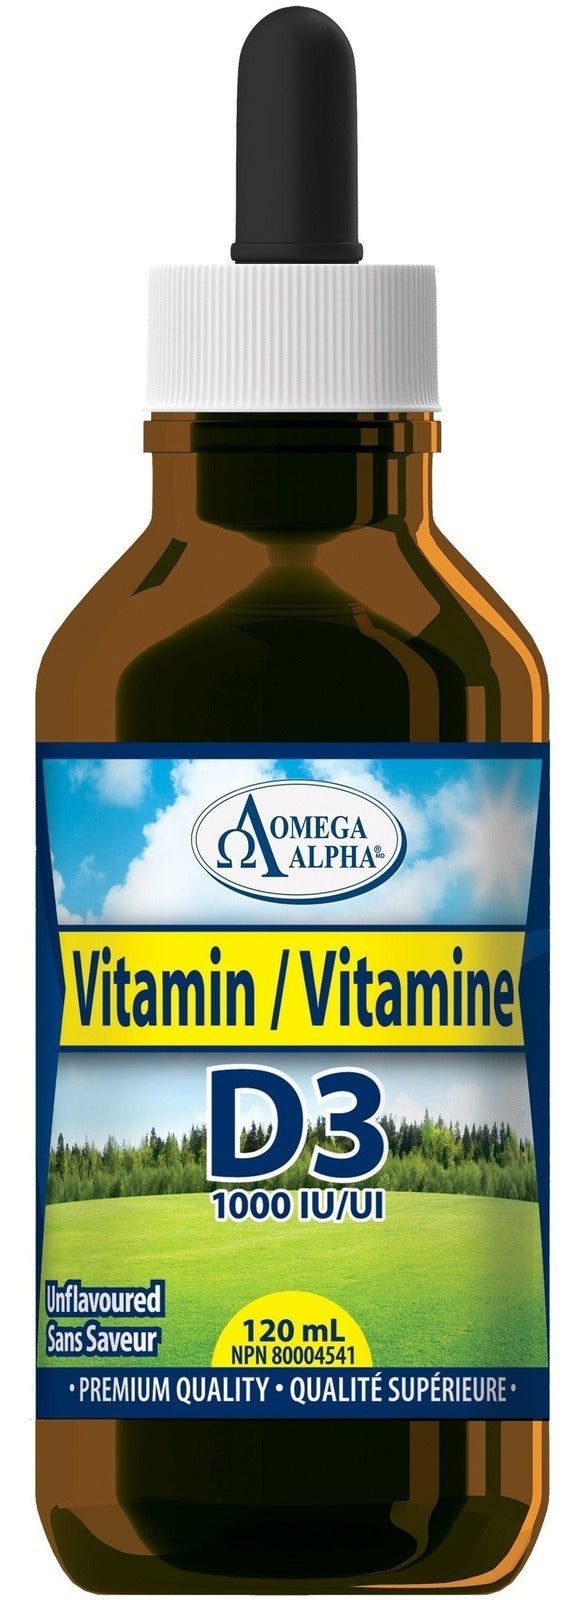 Omega Alpha Vitamin D3 1000 IU - Unflavoured 120 mL Image 1